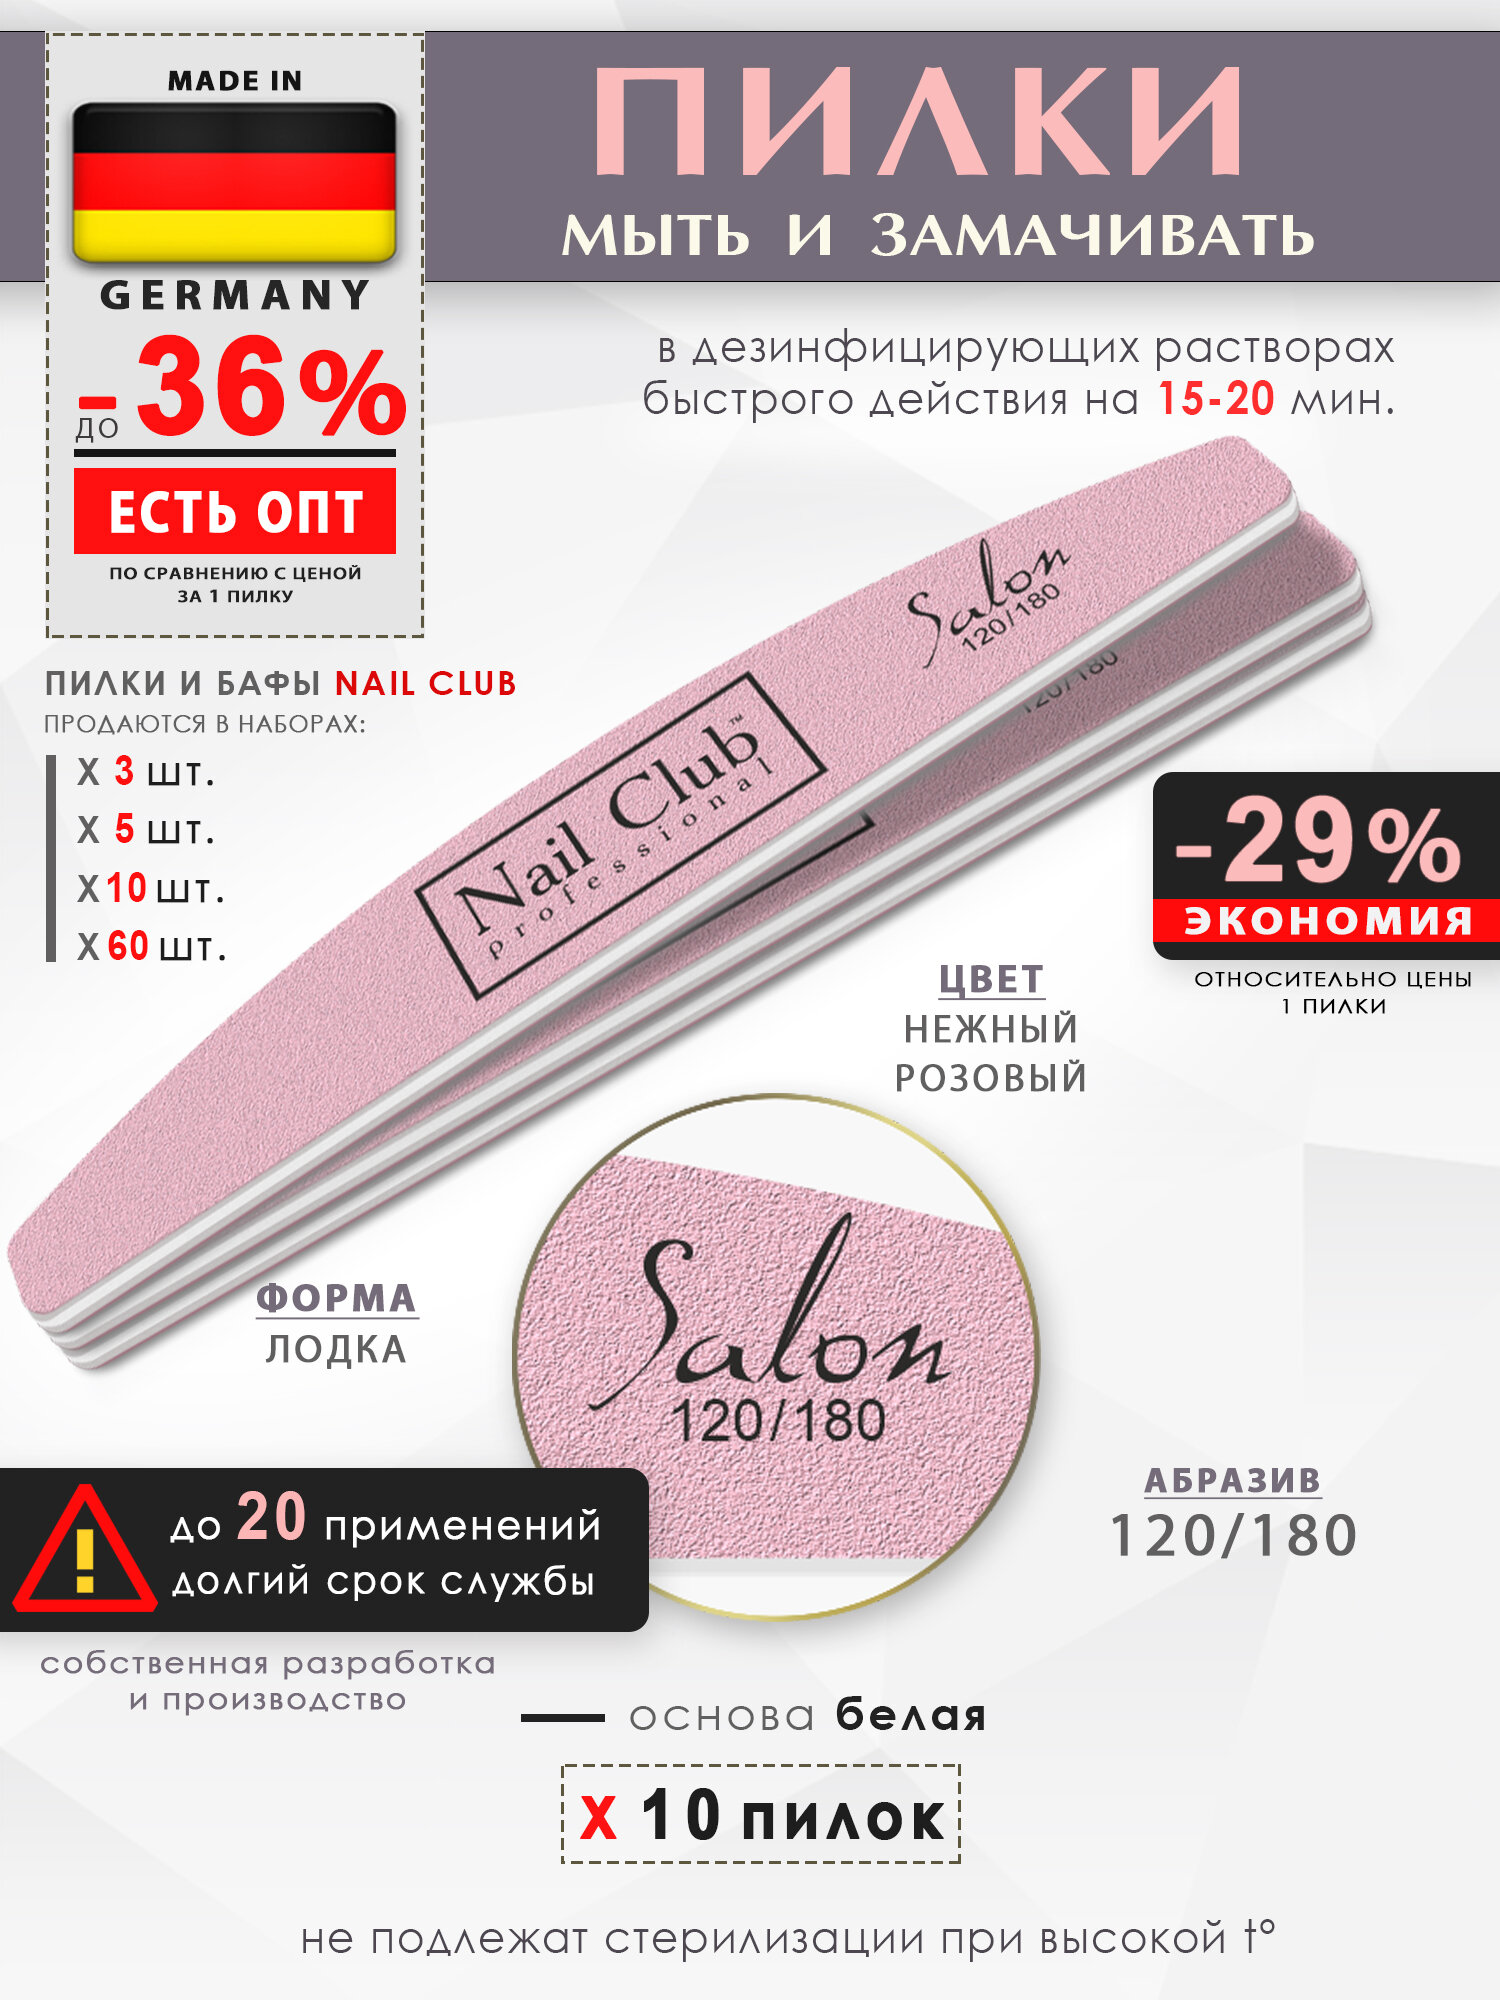 Nail Club professional Маникюрная пилка для опила ногтей розовая, серия Salon, форма лодка, абразив 120/180, 10 шт.